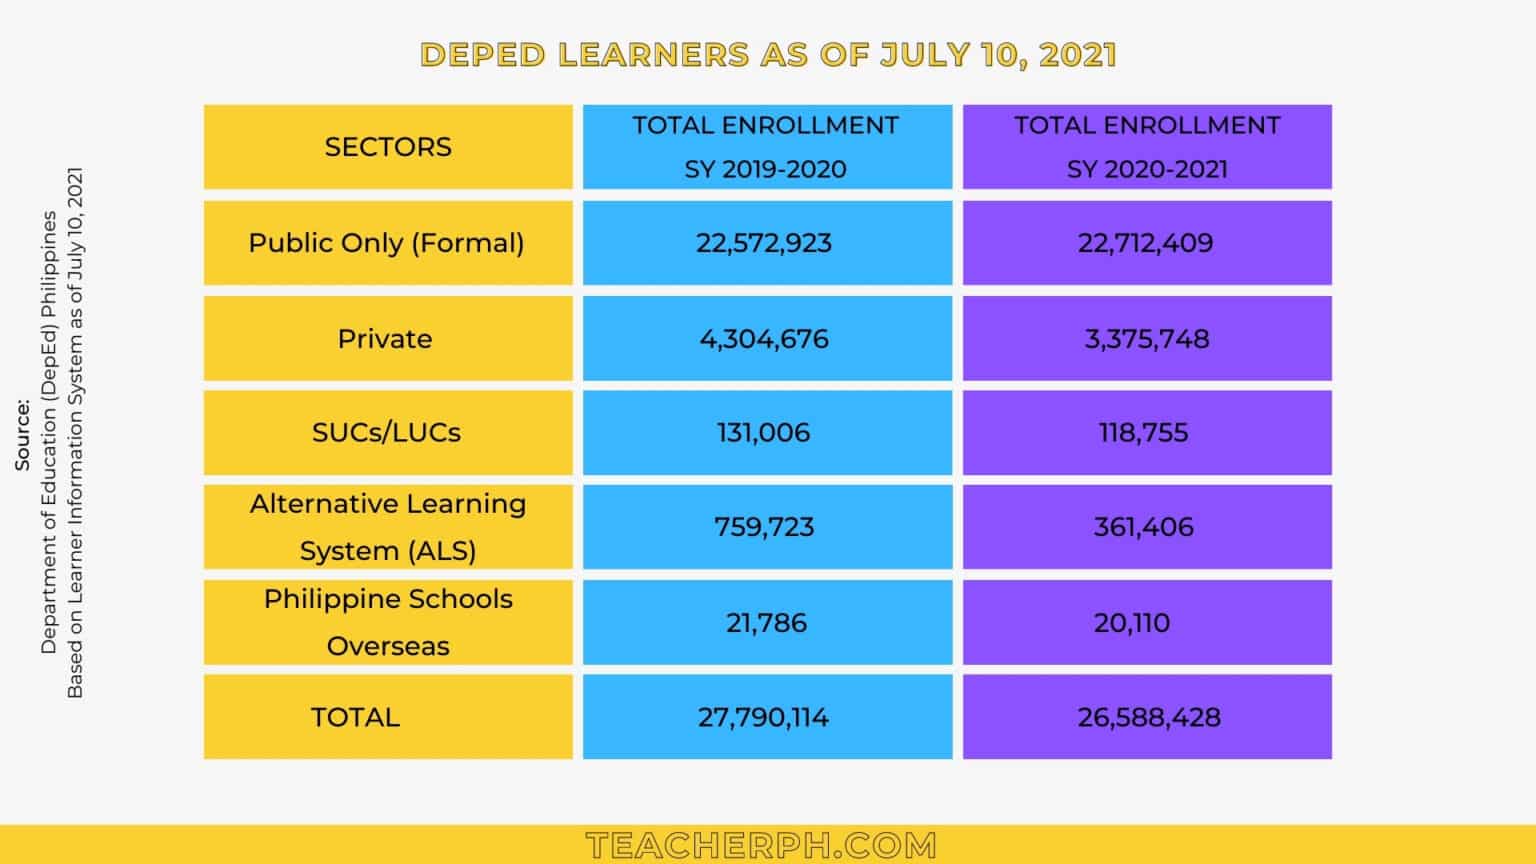 Deped Basic Education Statistics For School Year 2020 2021 Teacherph 4072